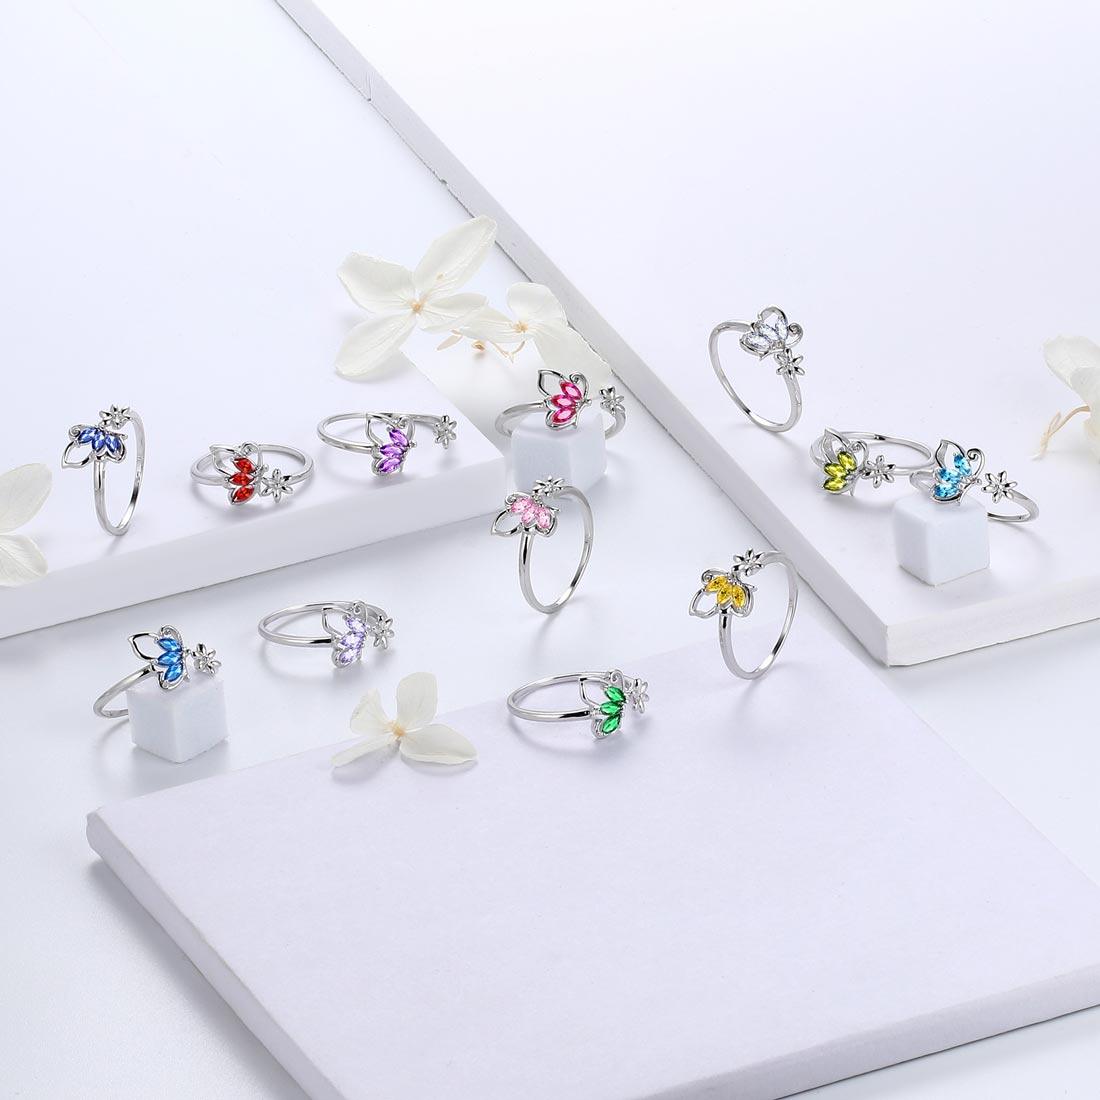 Butterfly Birthstone January Garnet Jewelry Set 4PCS - Jewelry Set - Aurora Tears